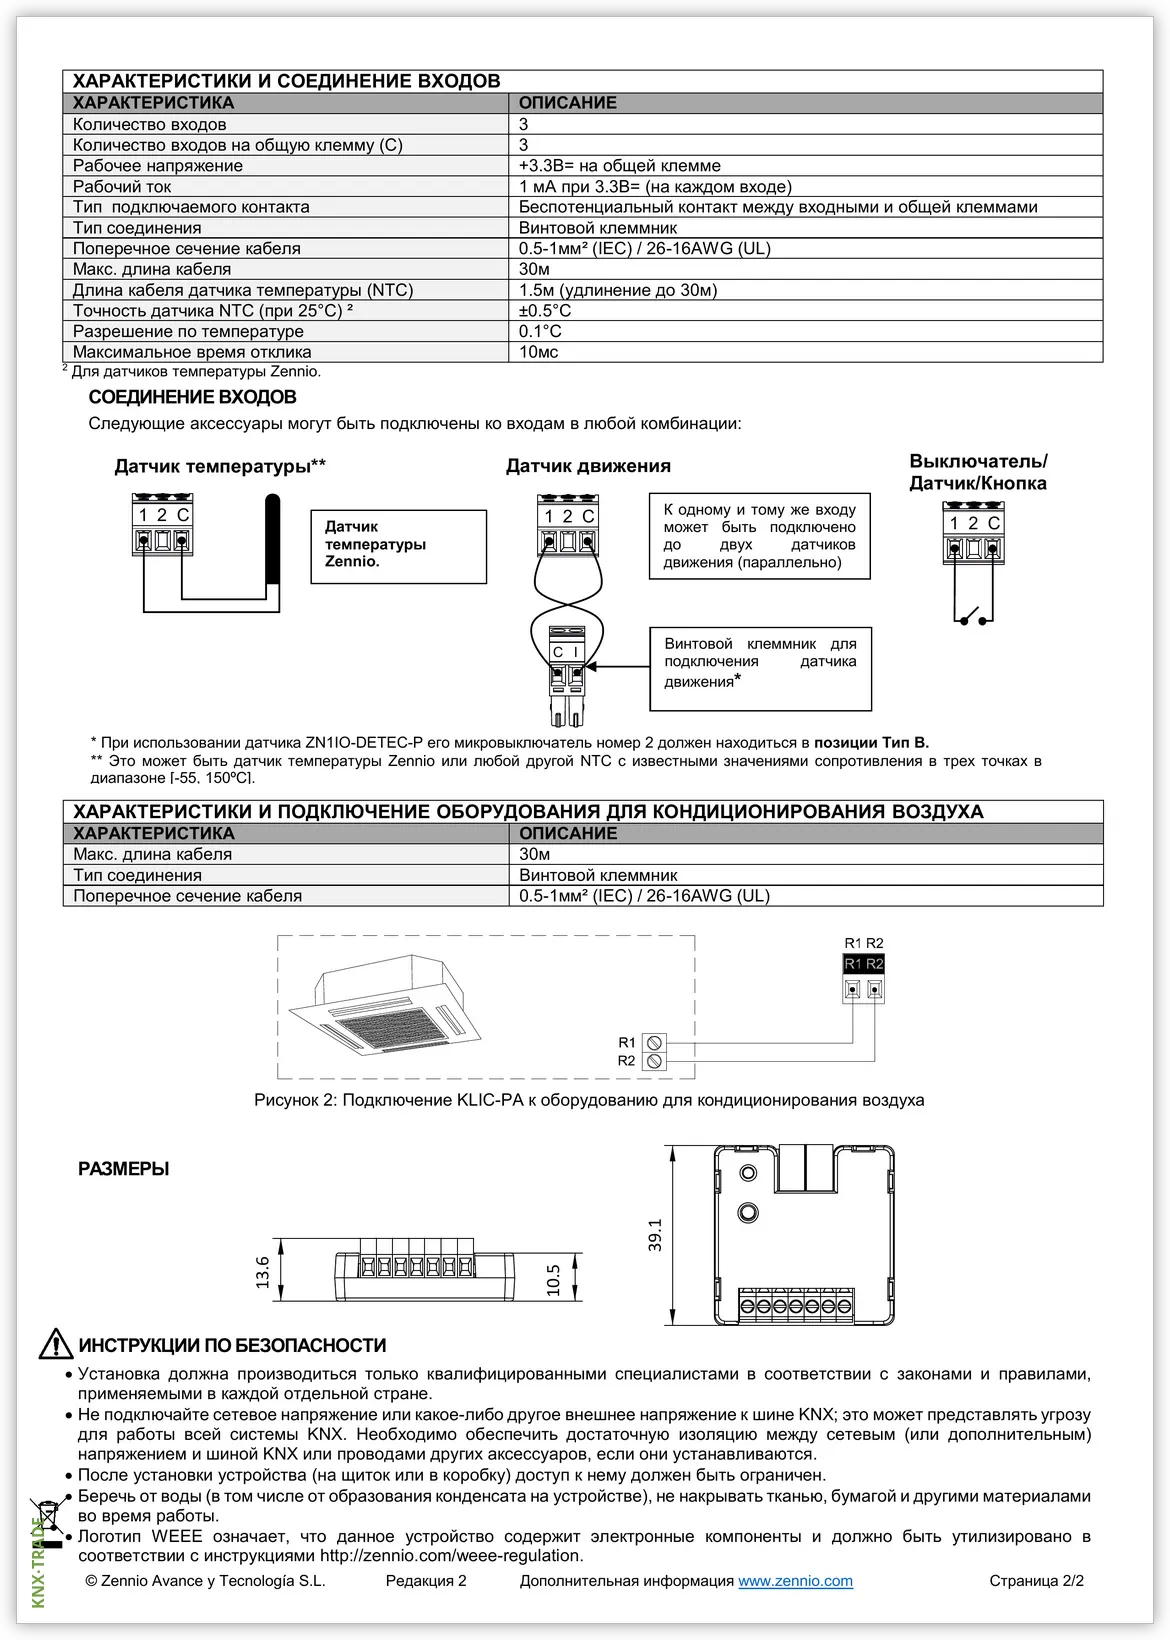 Datasheet (2) Zennio [ZCLPA] KLIC-PA / Шлюз KNX для управления кондиционерами Panasonic